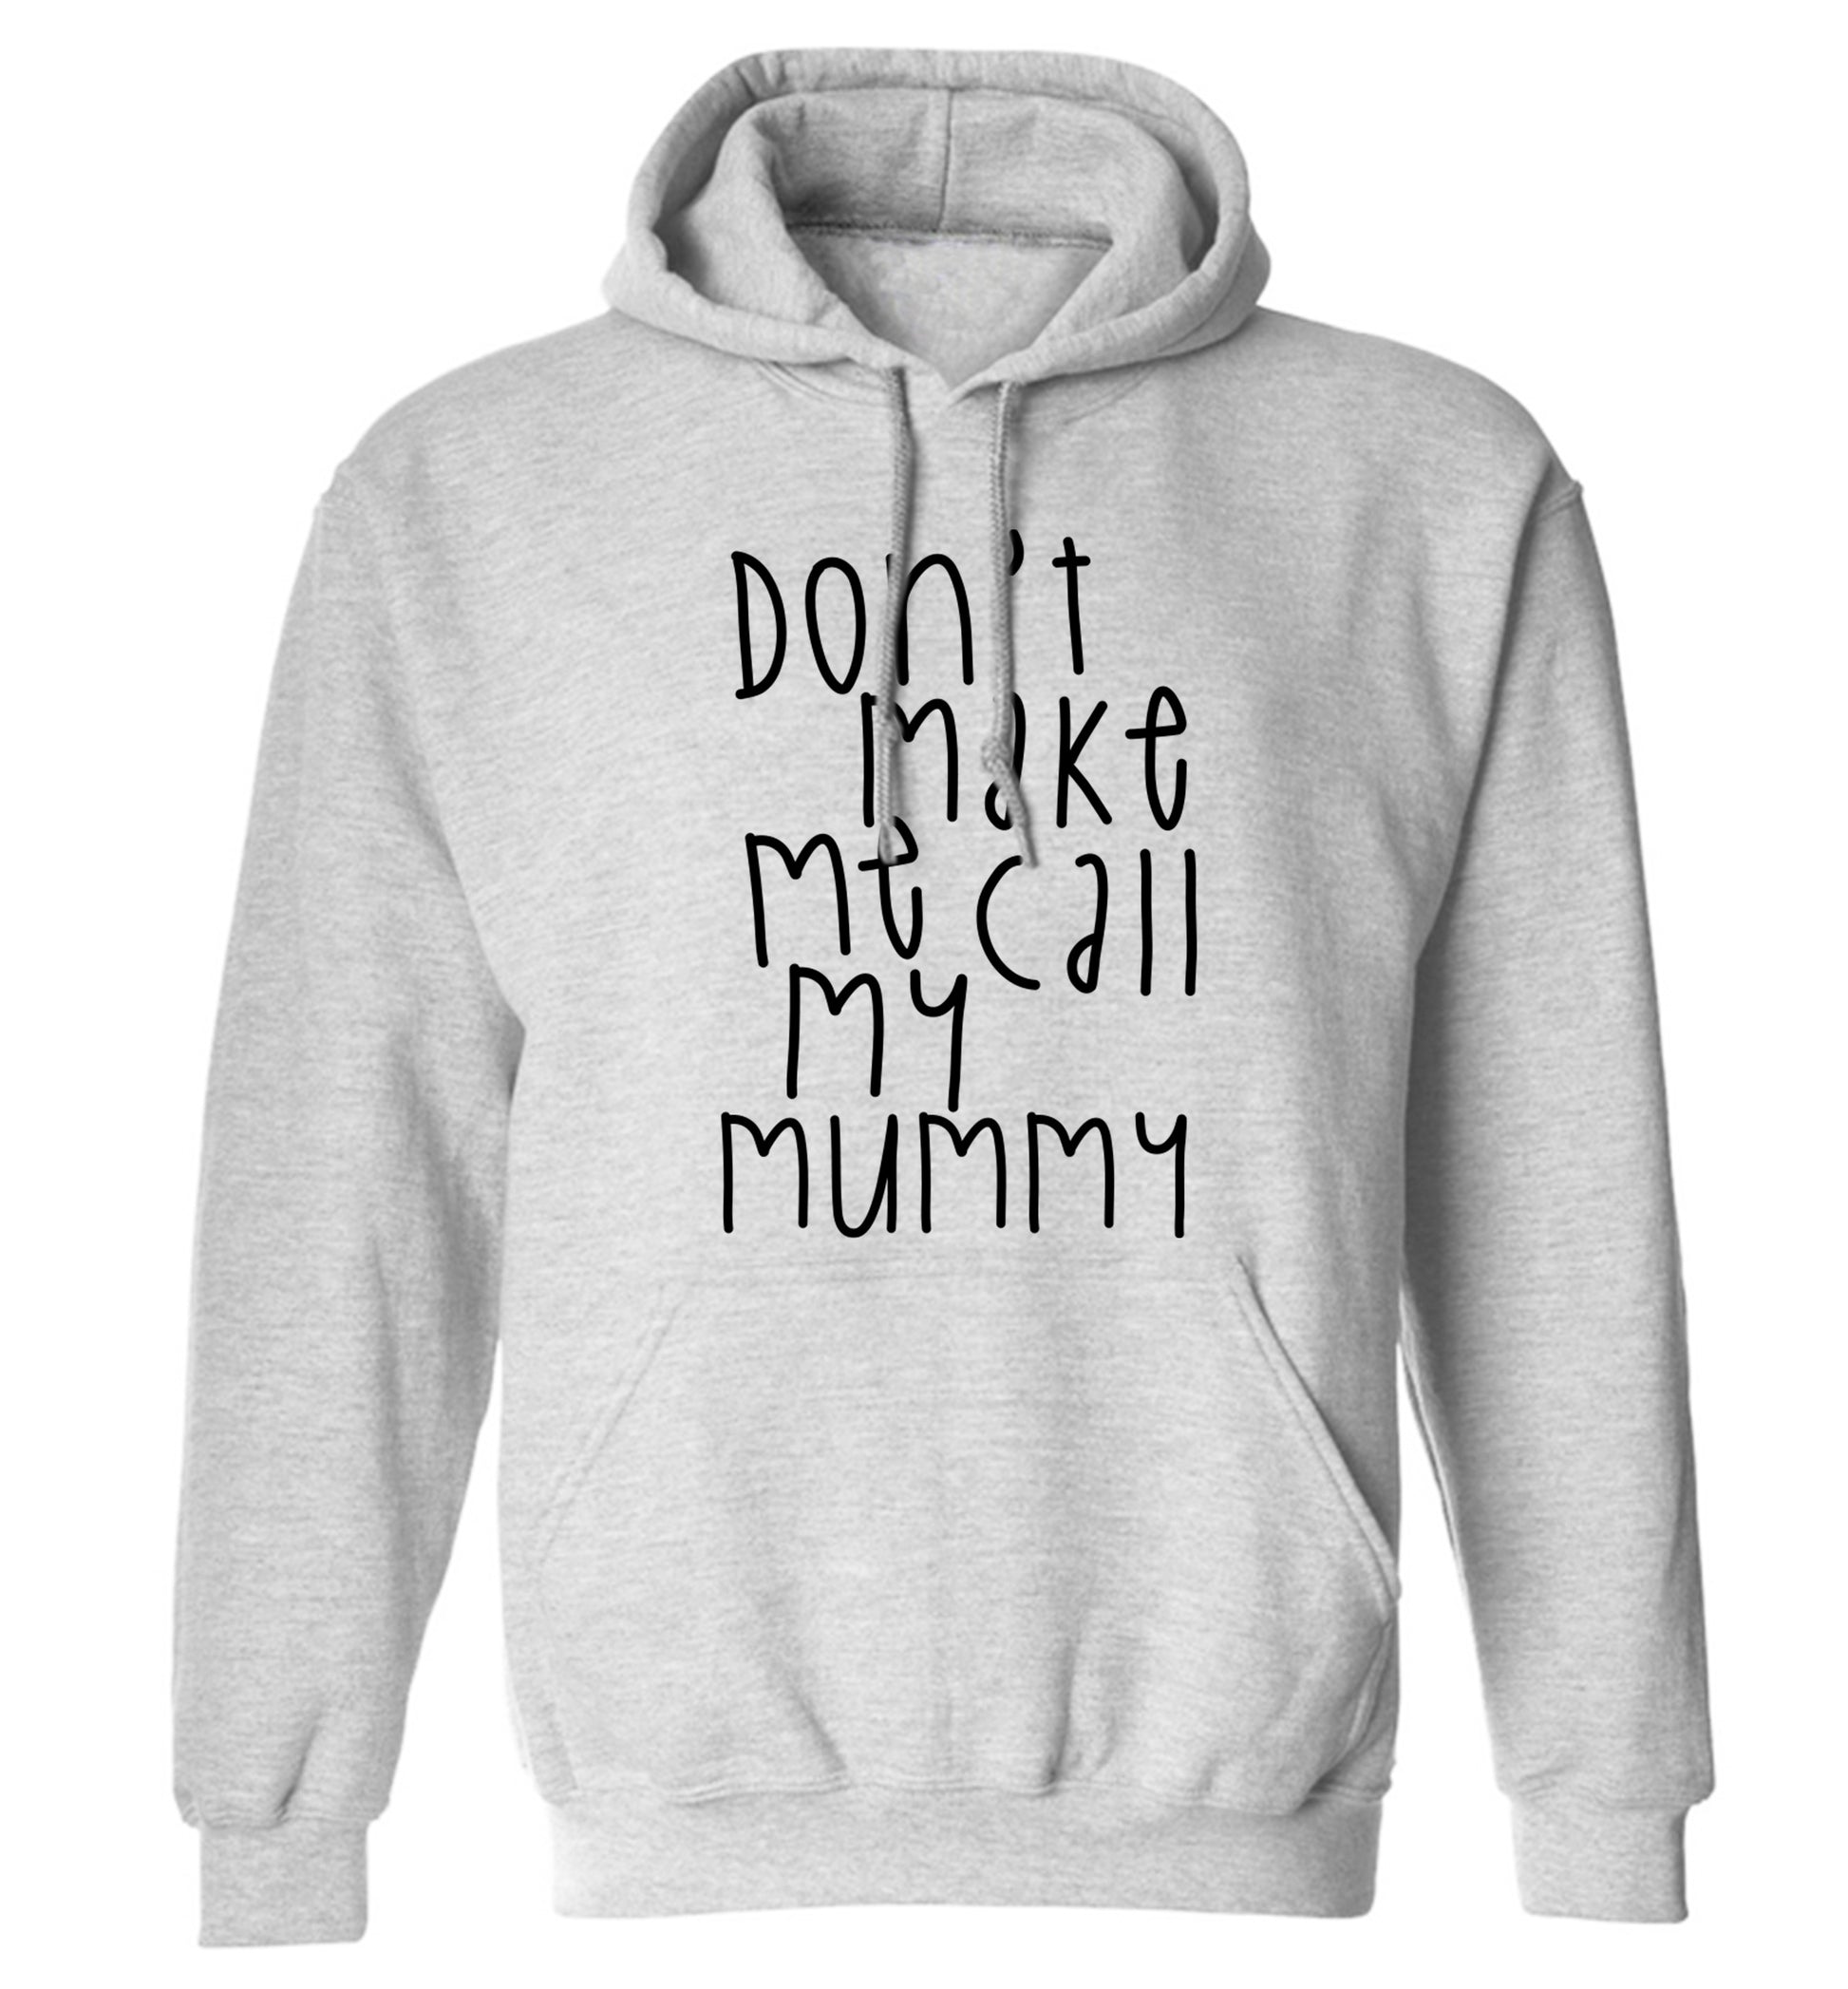 Don't make me call my mummy adults unisex grey hoodie 2XL